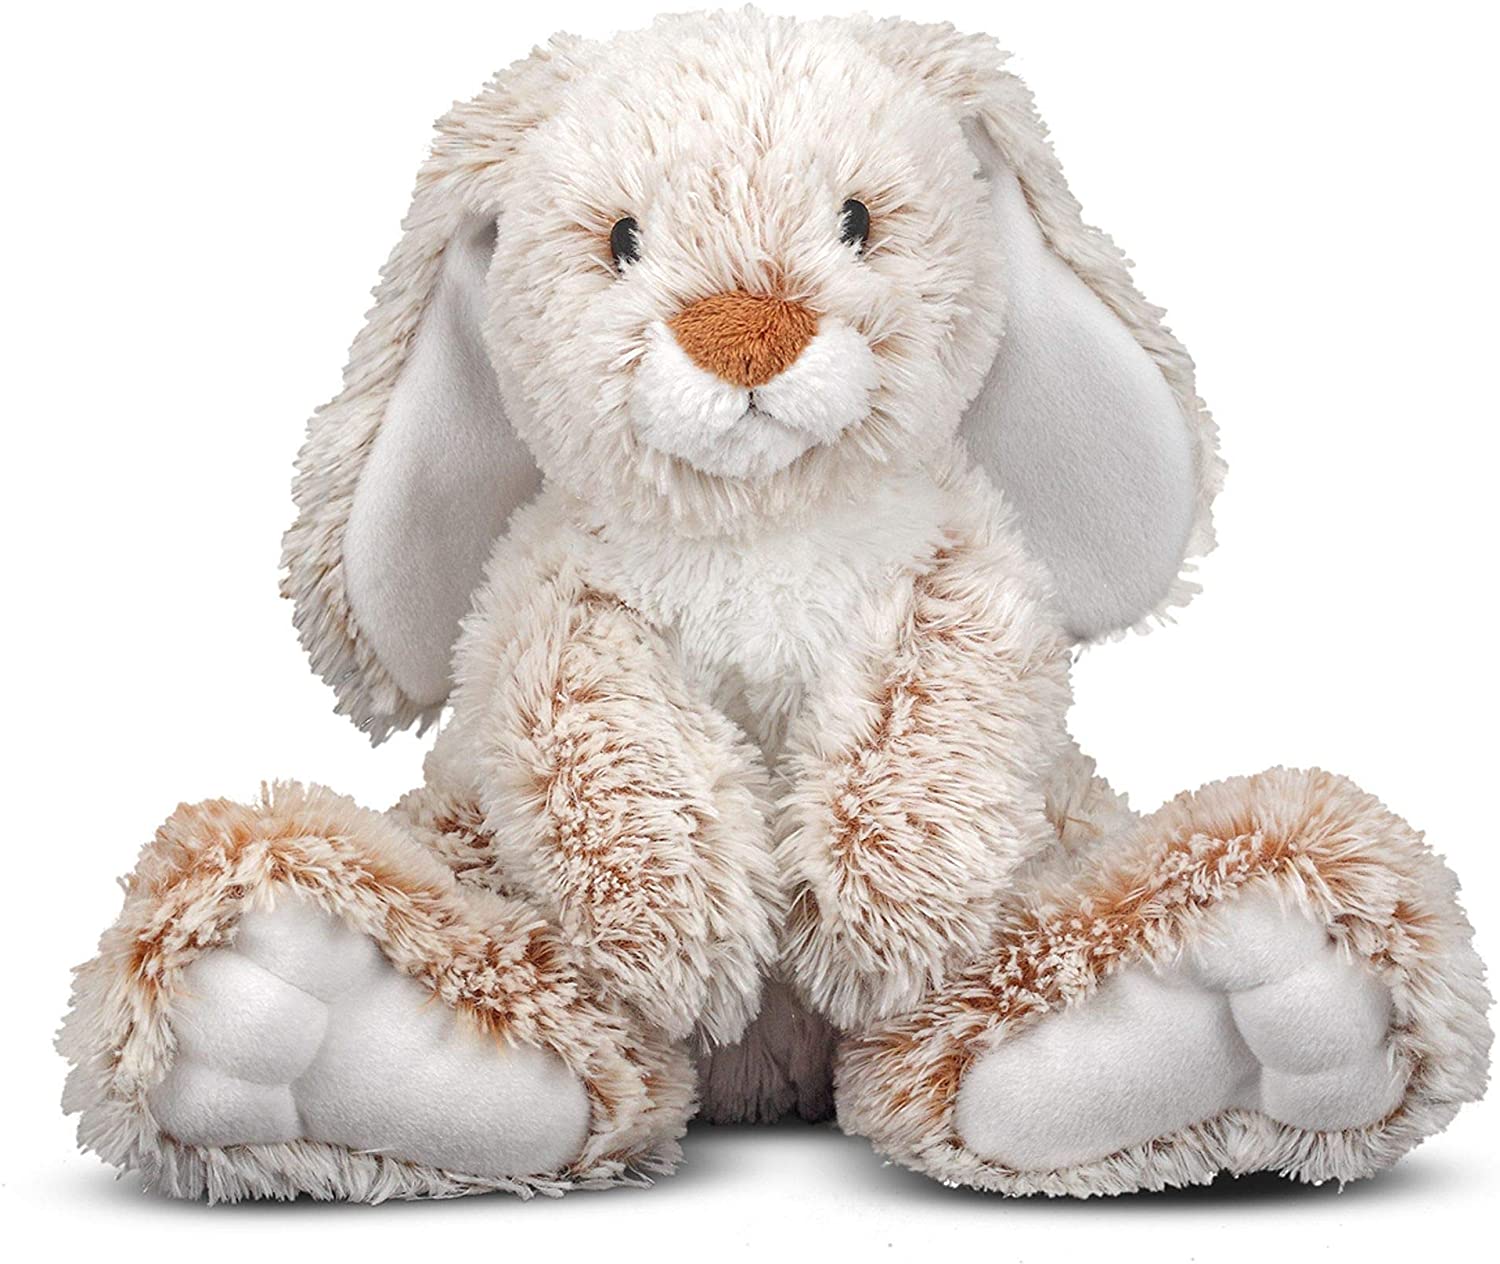 Melissa & Doug Stuffed Animals – Mother Earth Baby/Curious Kidz Toys